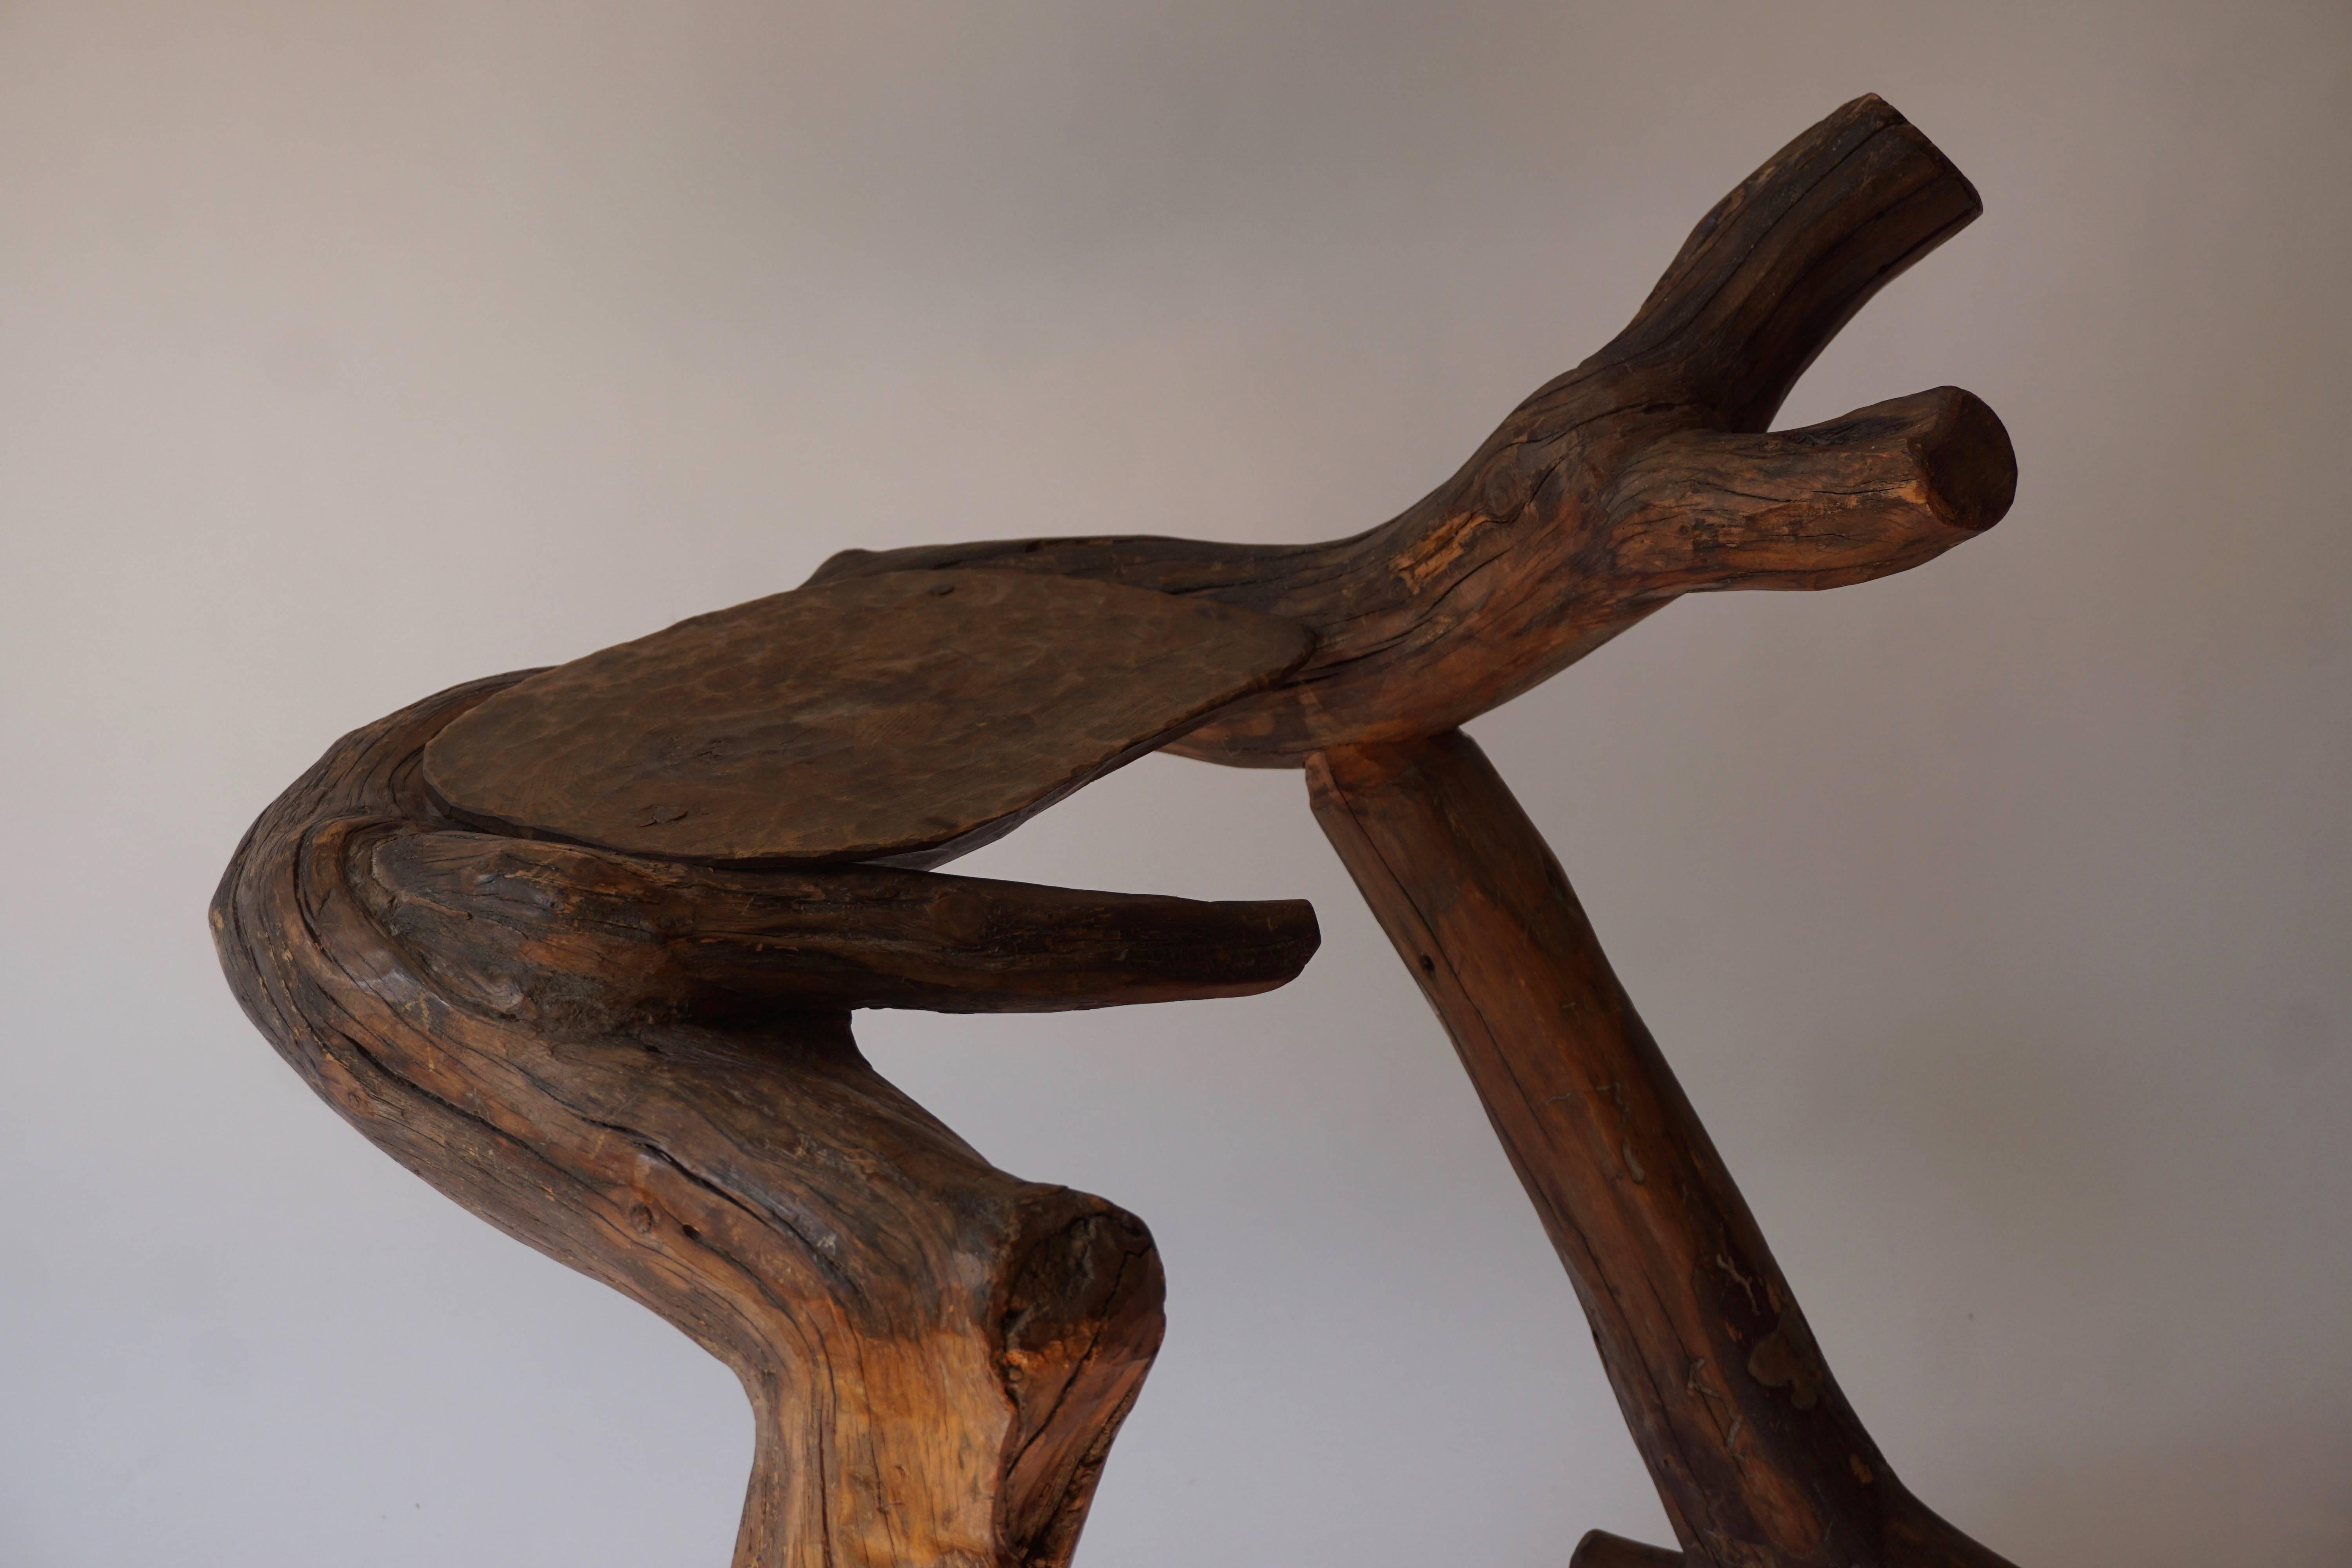  Organic/Rustic Mid-Century Chair 1